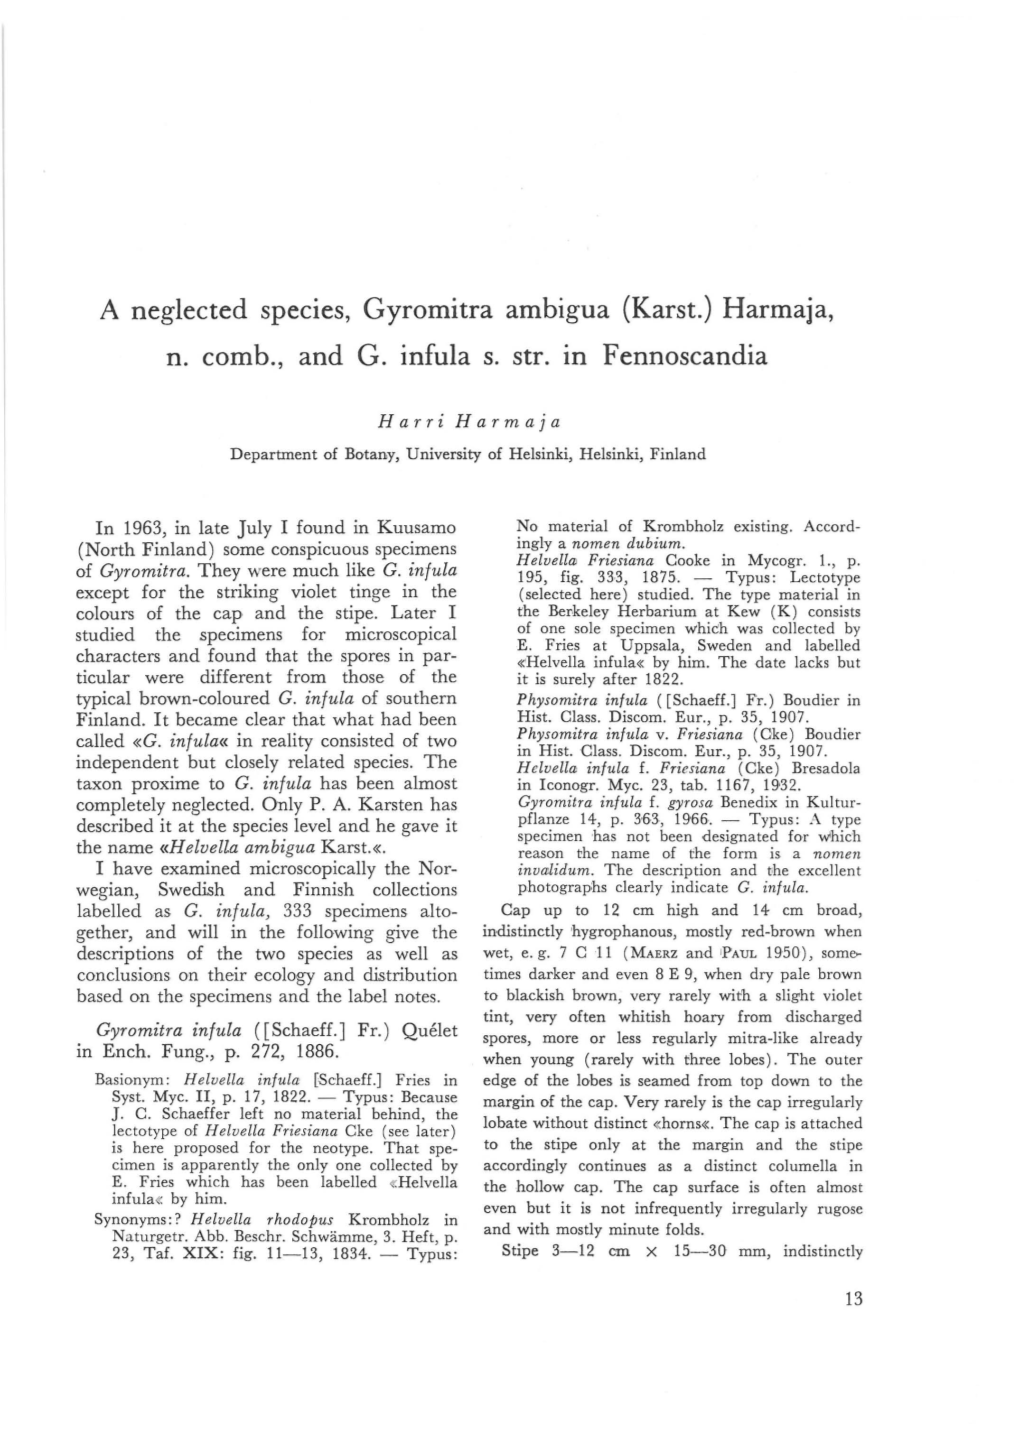 A Neglected Species, Gyromitra Ambigua (Karst.) Harmaja, N. Comb., and G